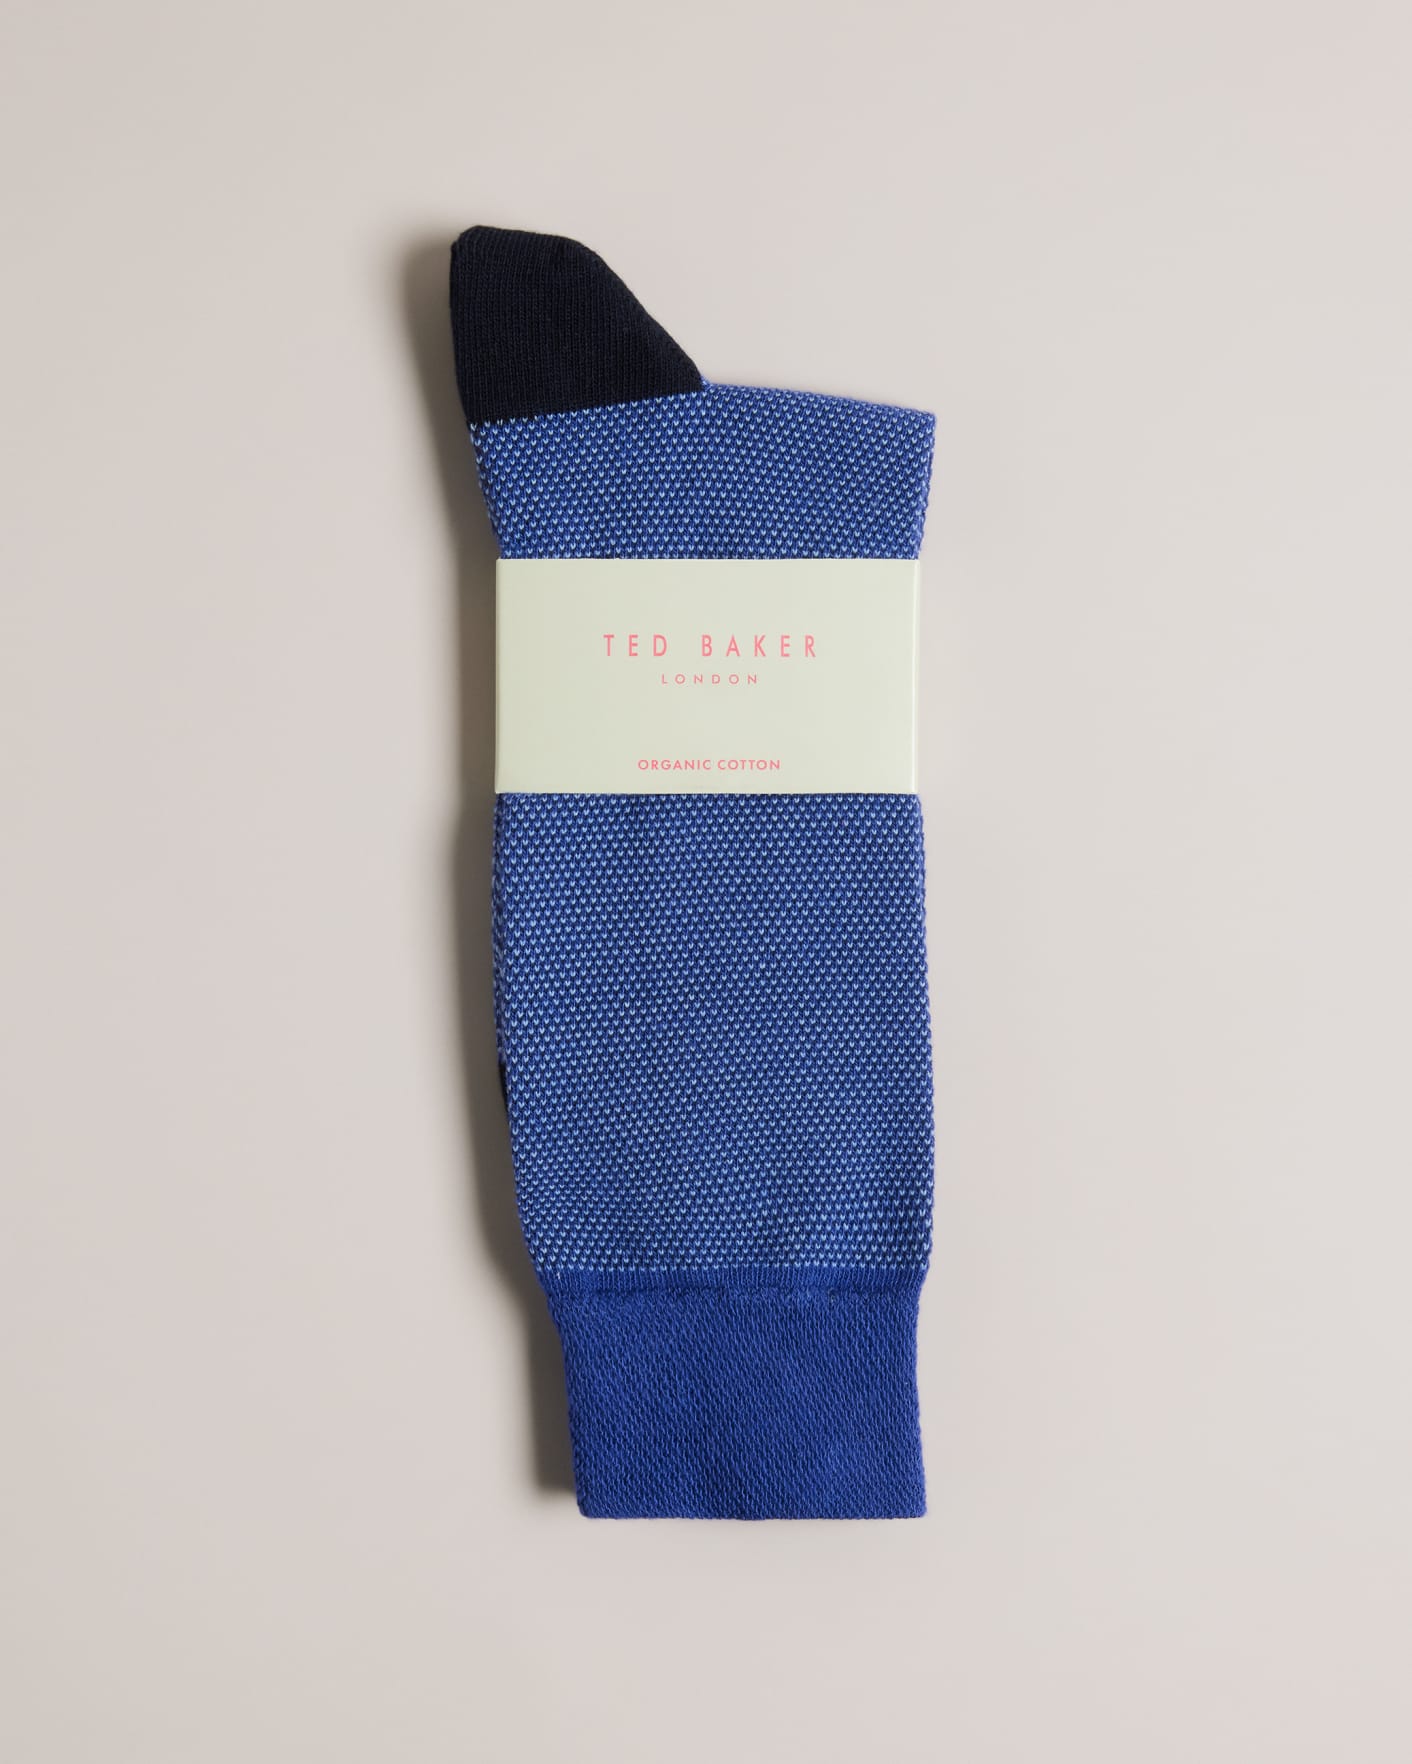 CORETEX - BLUE, Socks